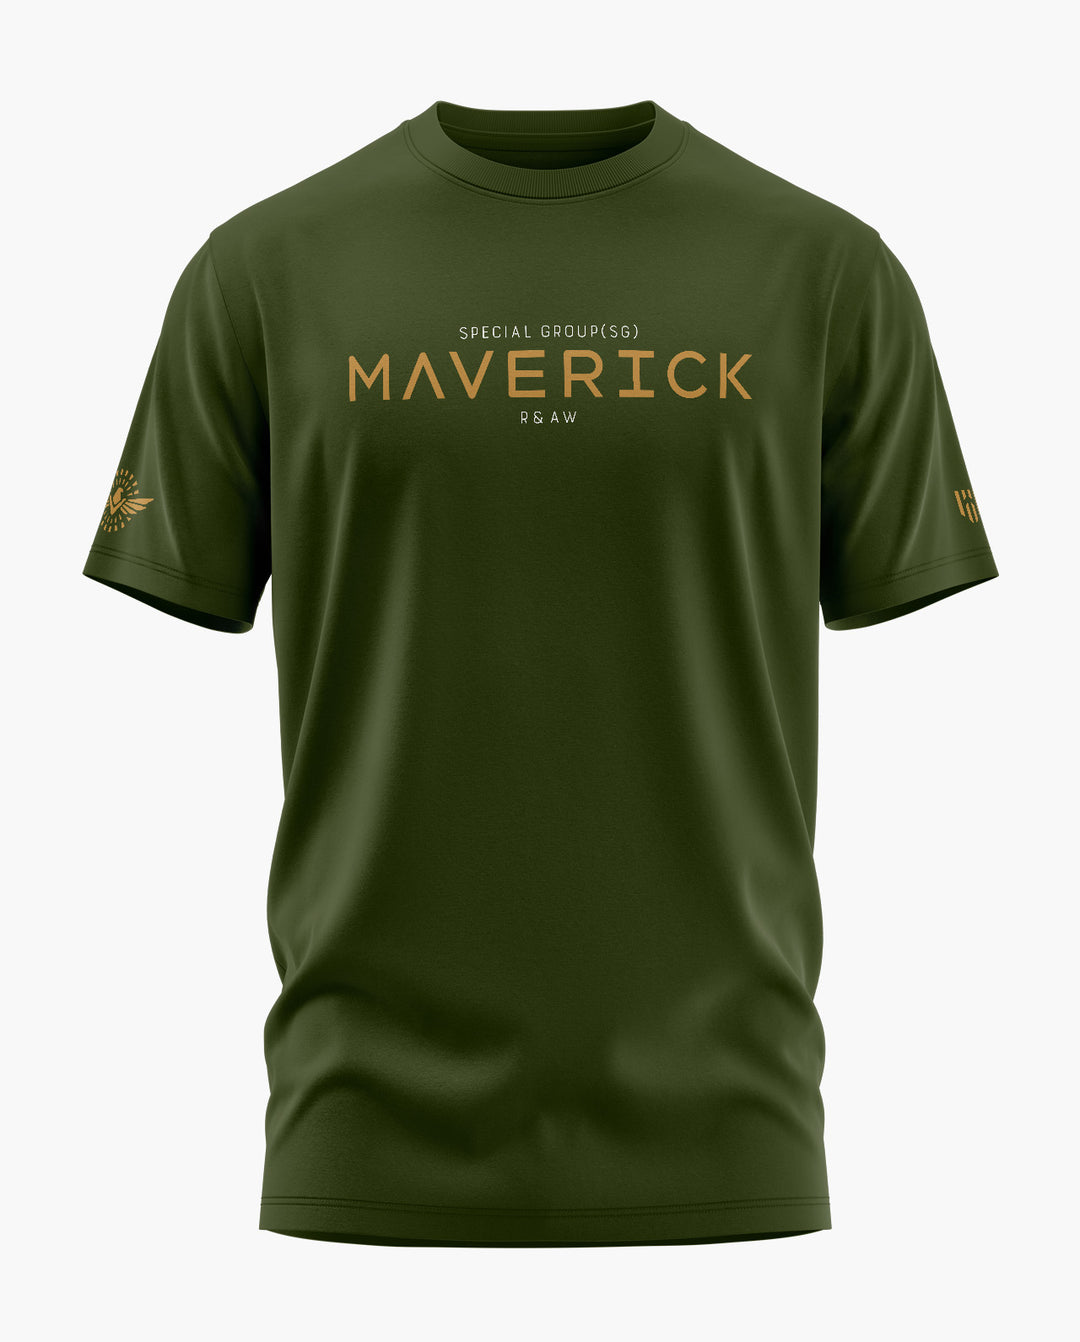 MAVERICK (SG) T-Shirt